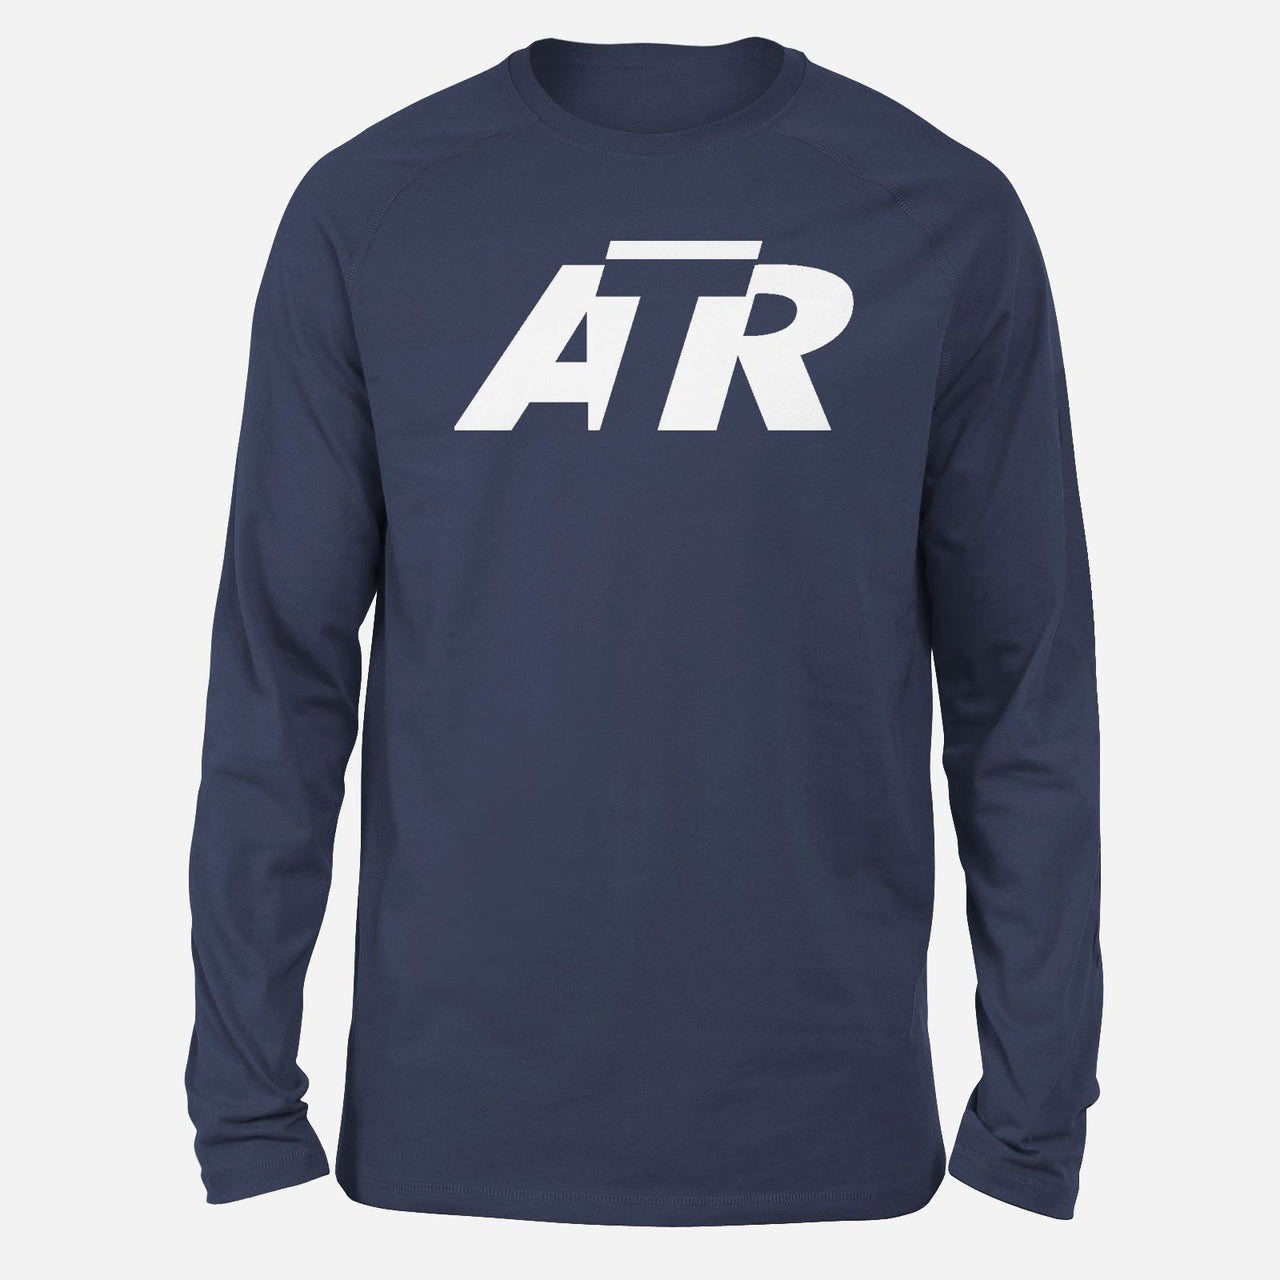 ATR & Text Designed Long-Sleeve T-Shirts